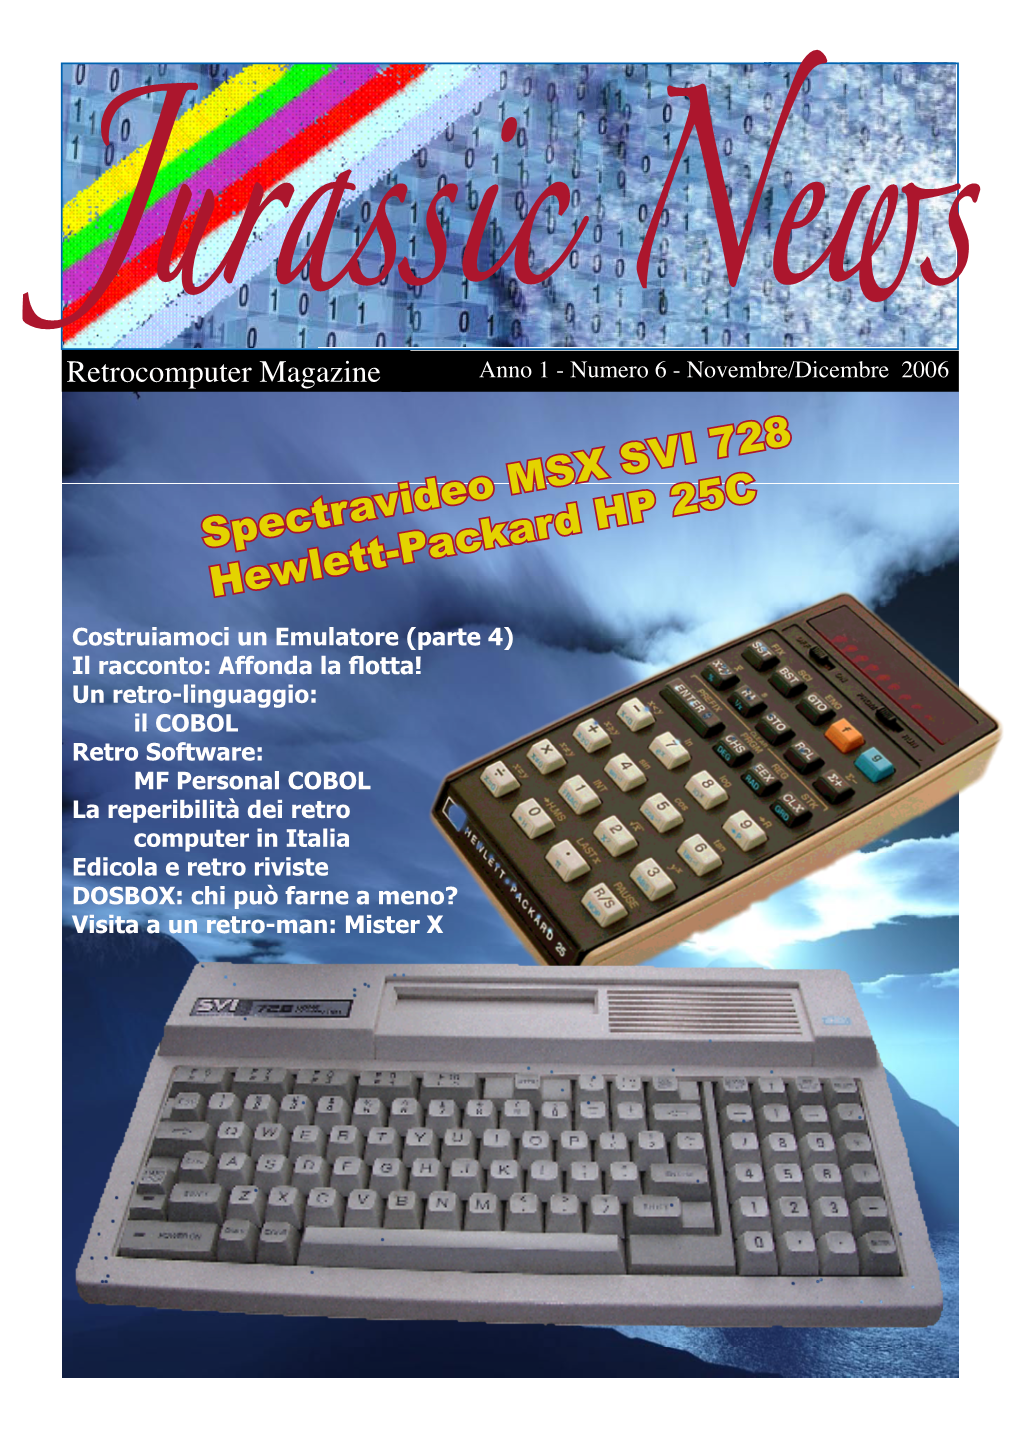 Spectravideo MSX SVI 728 Hewlett-Packard HP